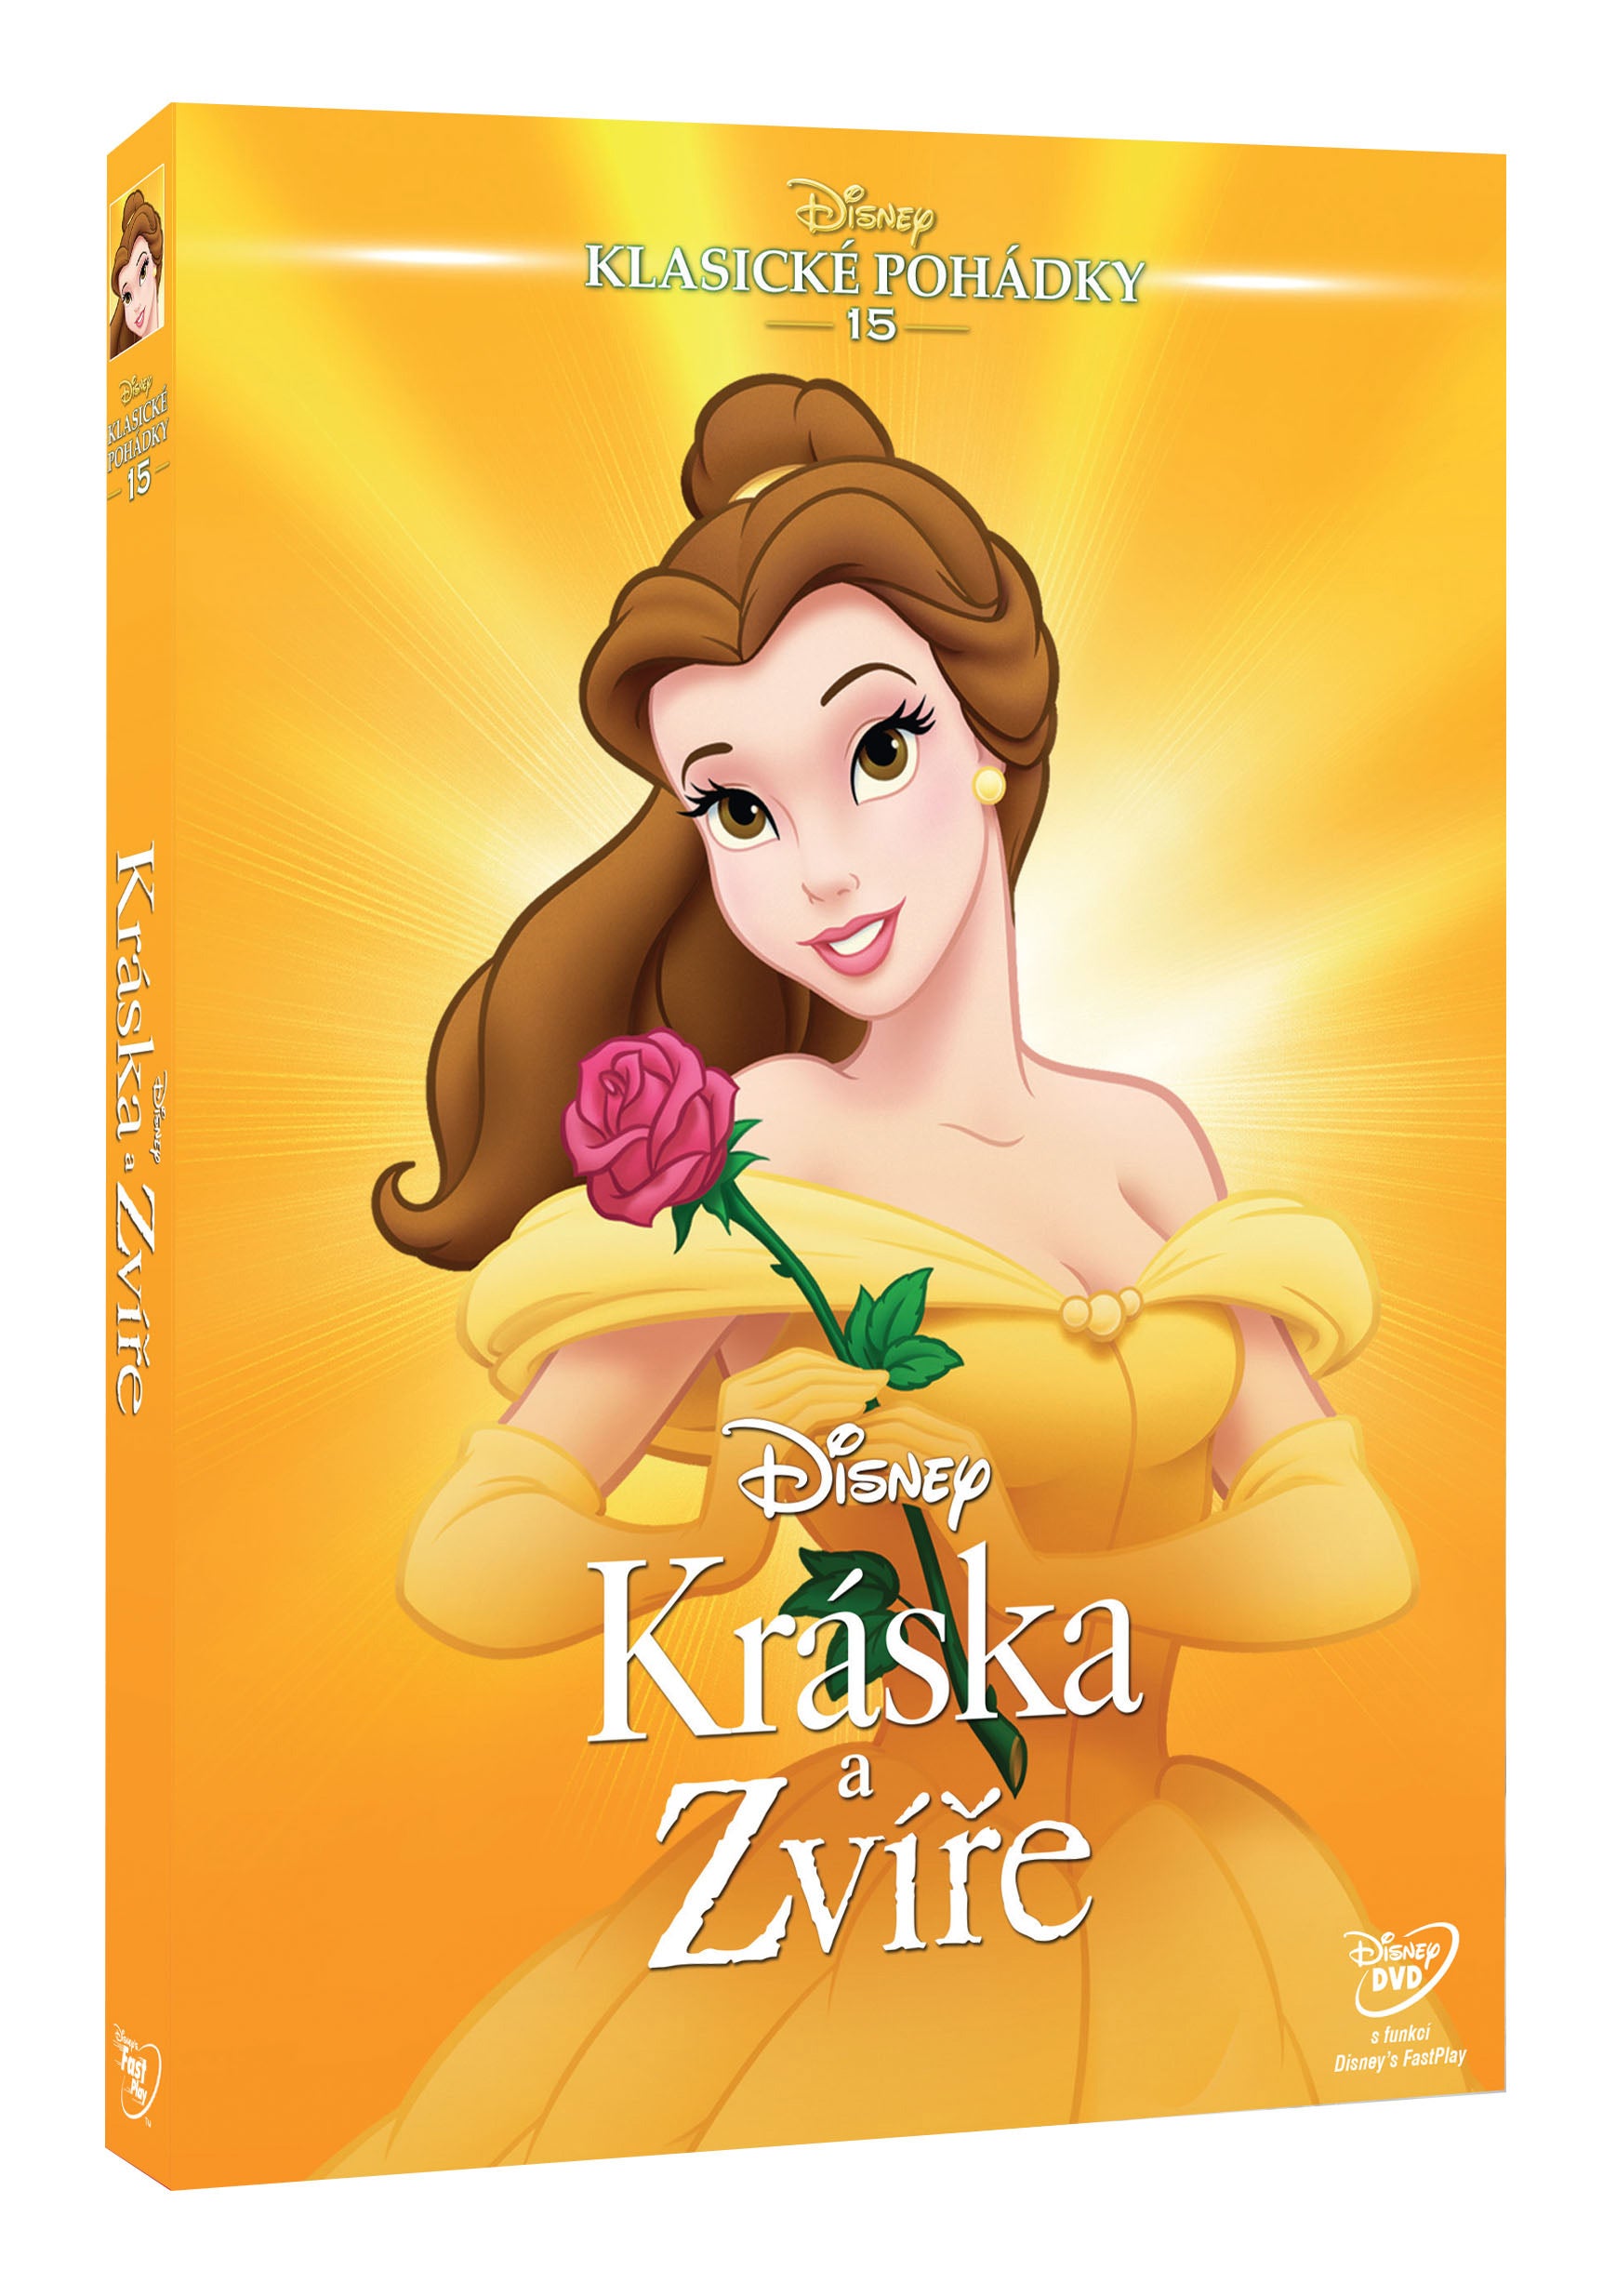 Kraska a zvire S.E. - Edice Disney klasicke pohadky 15. (Beauty and the Beast - Special Edition)